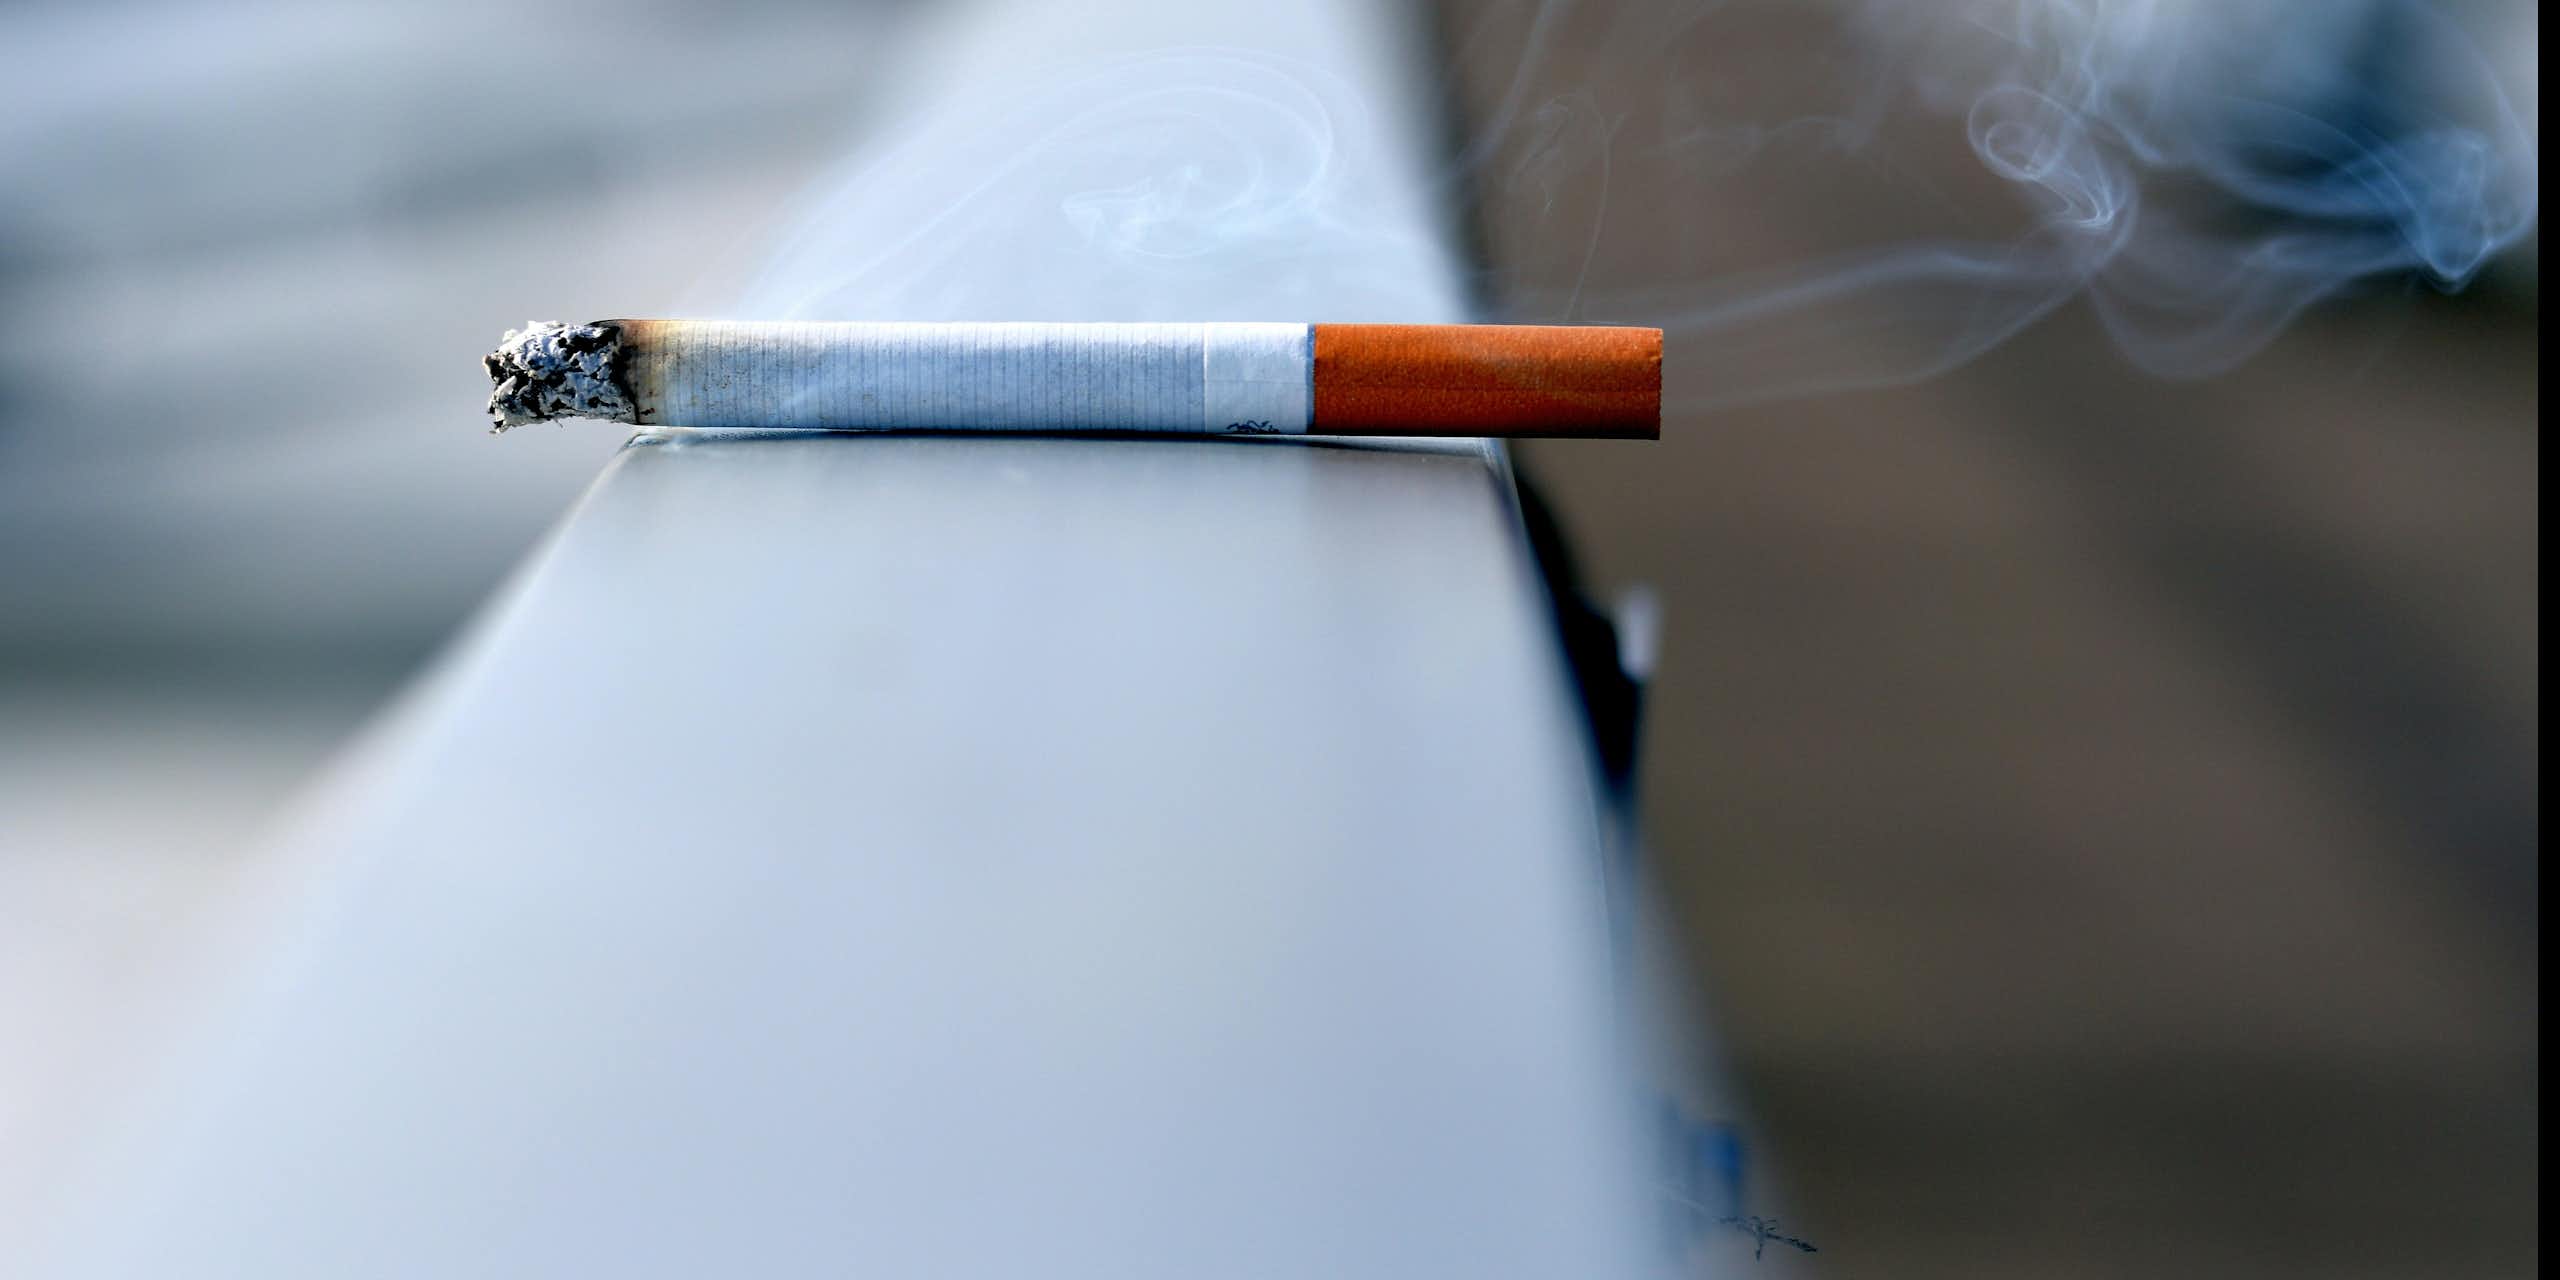 A cigarette sitting on a ledge.